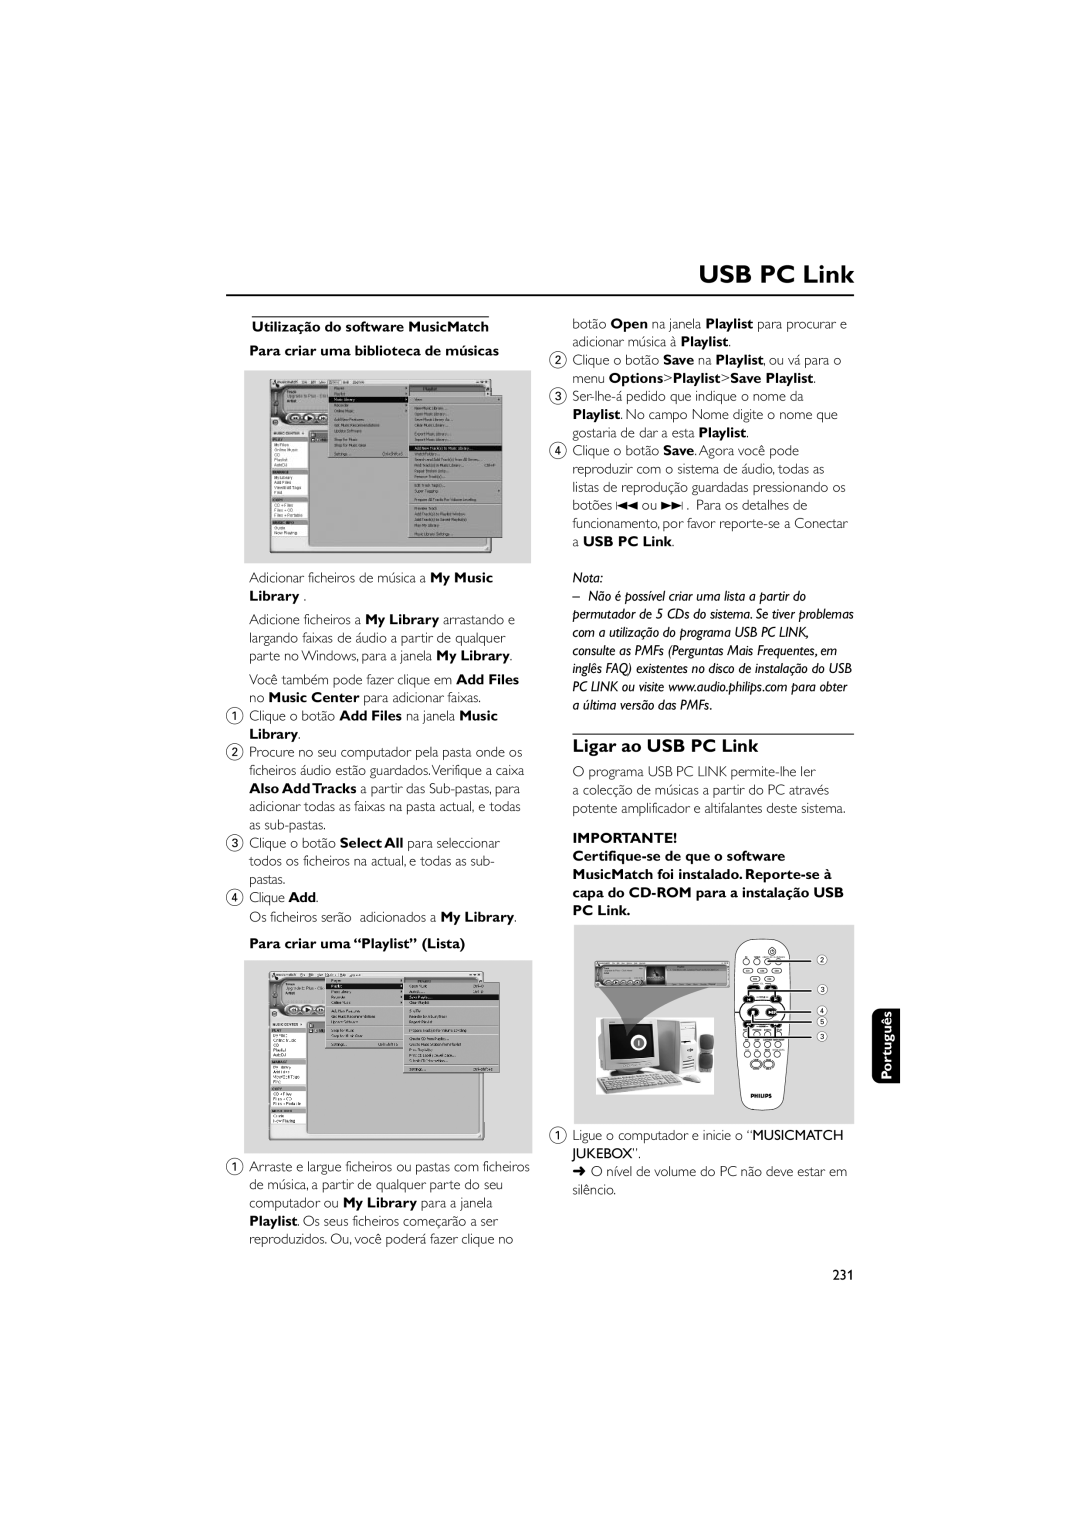 Philips FWM589 manual USB PC Link, menu Options Playlist Save Playlist, Para criar uma “Playlist” Lista, Nota, Importante 